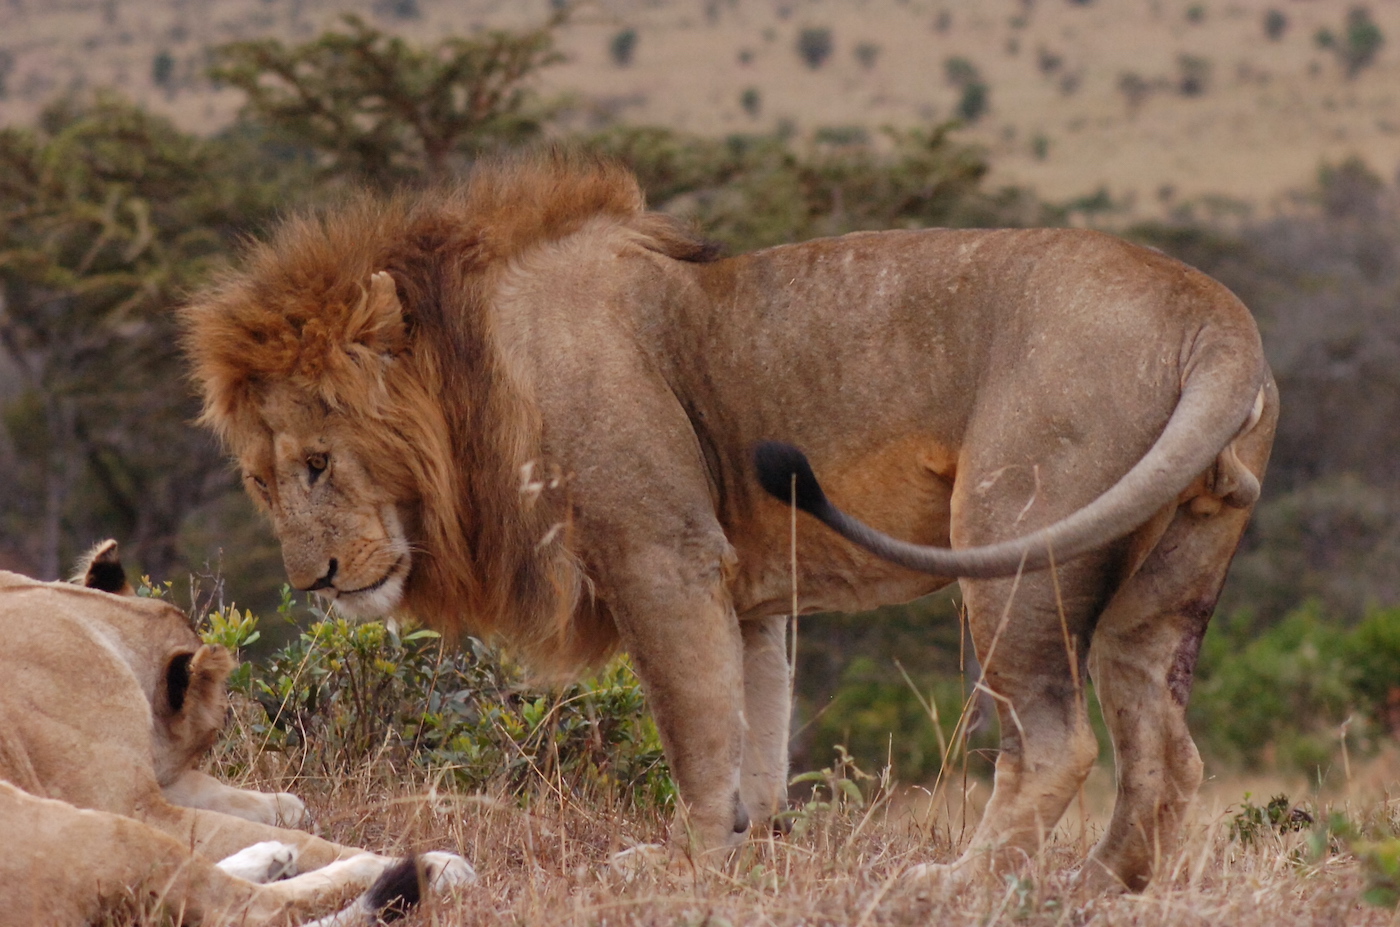 Honeymoon Kenya 7 days safari